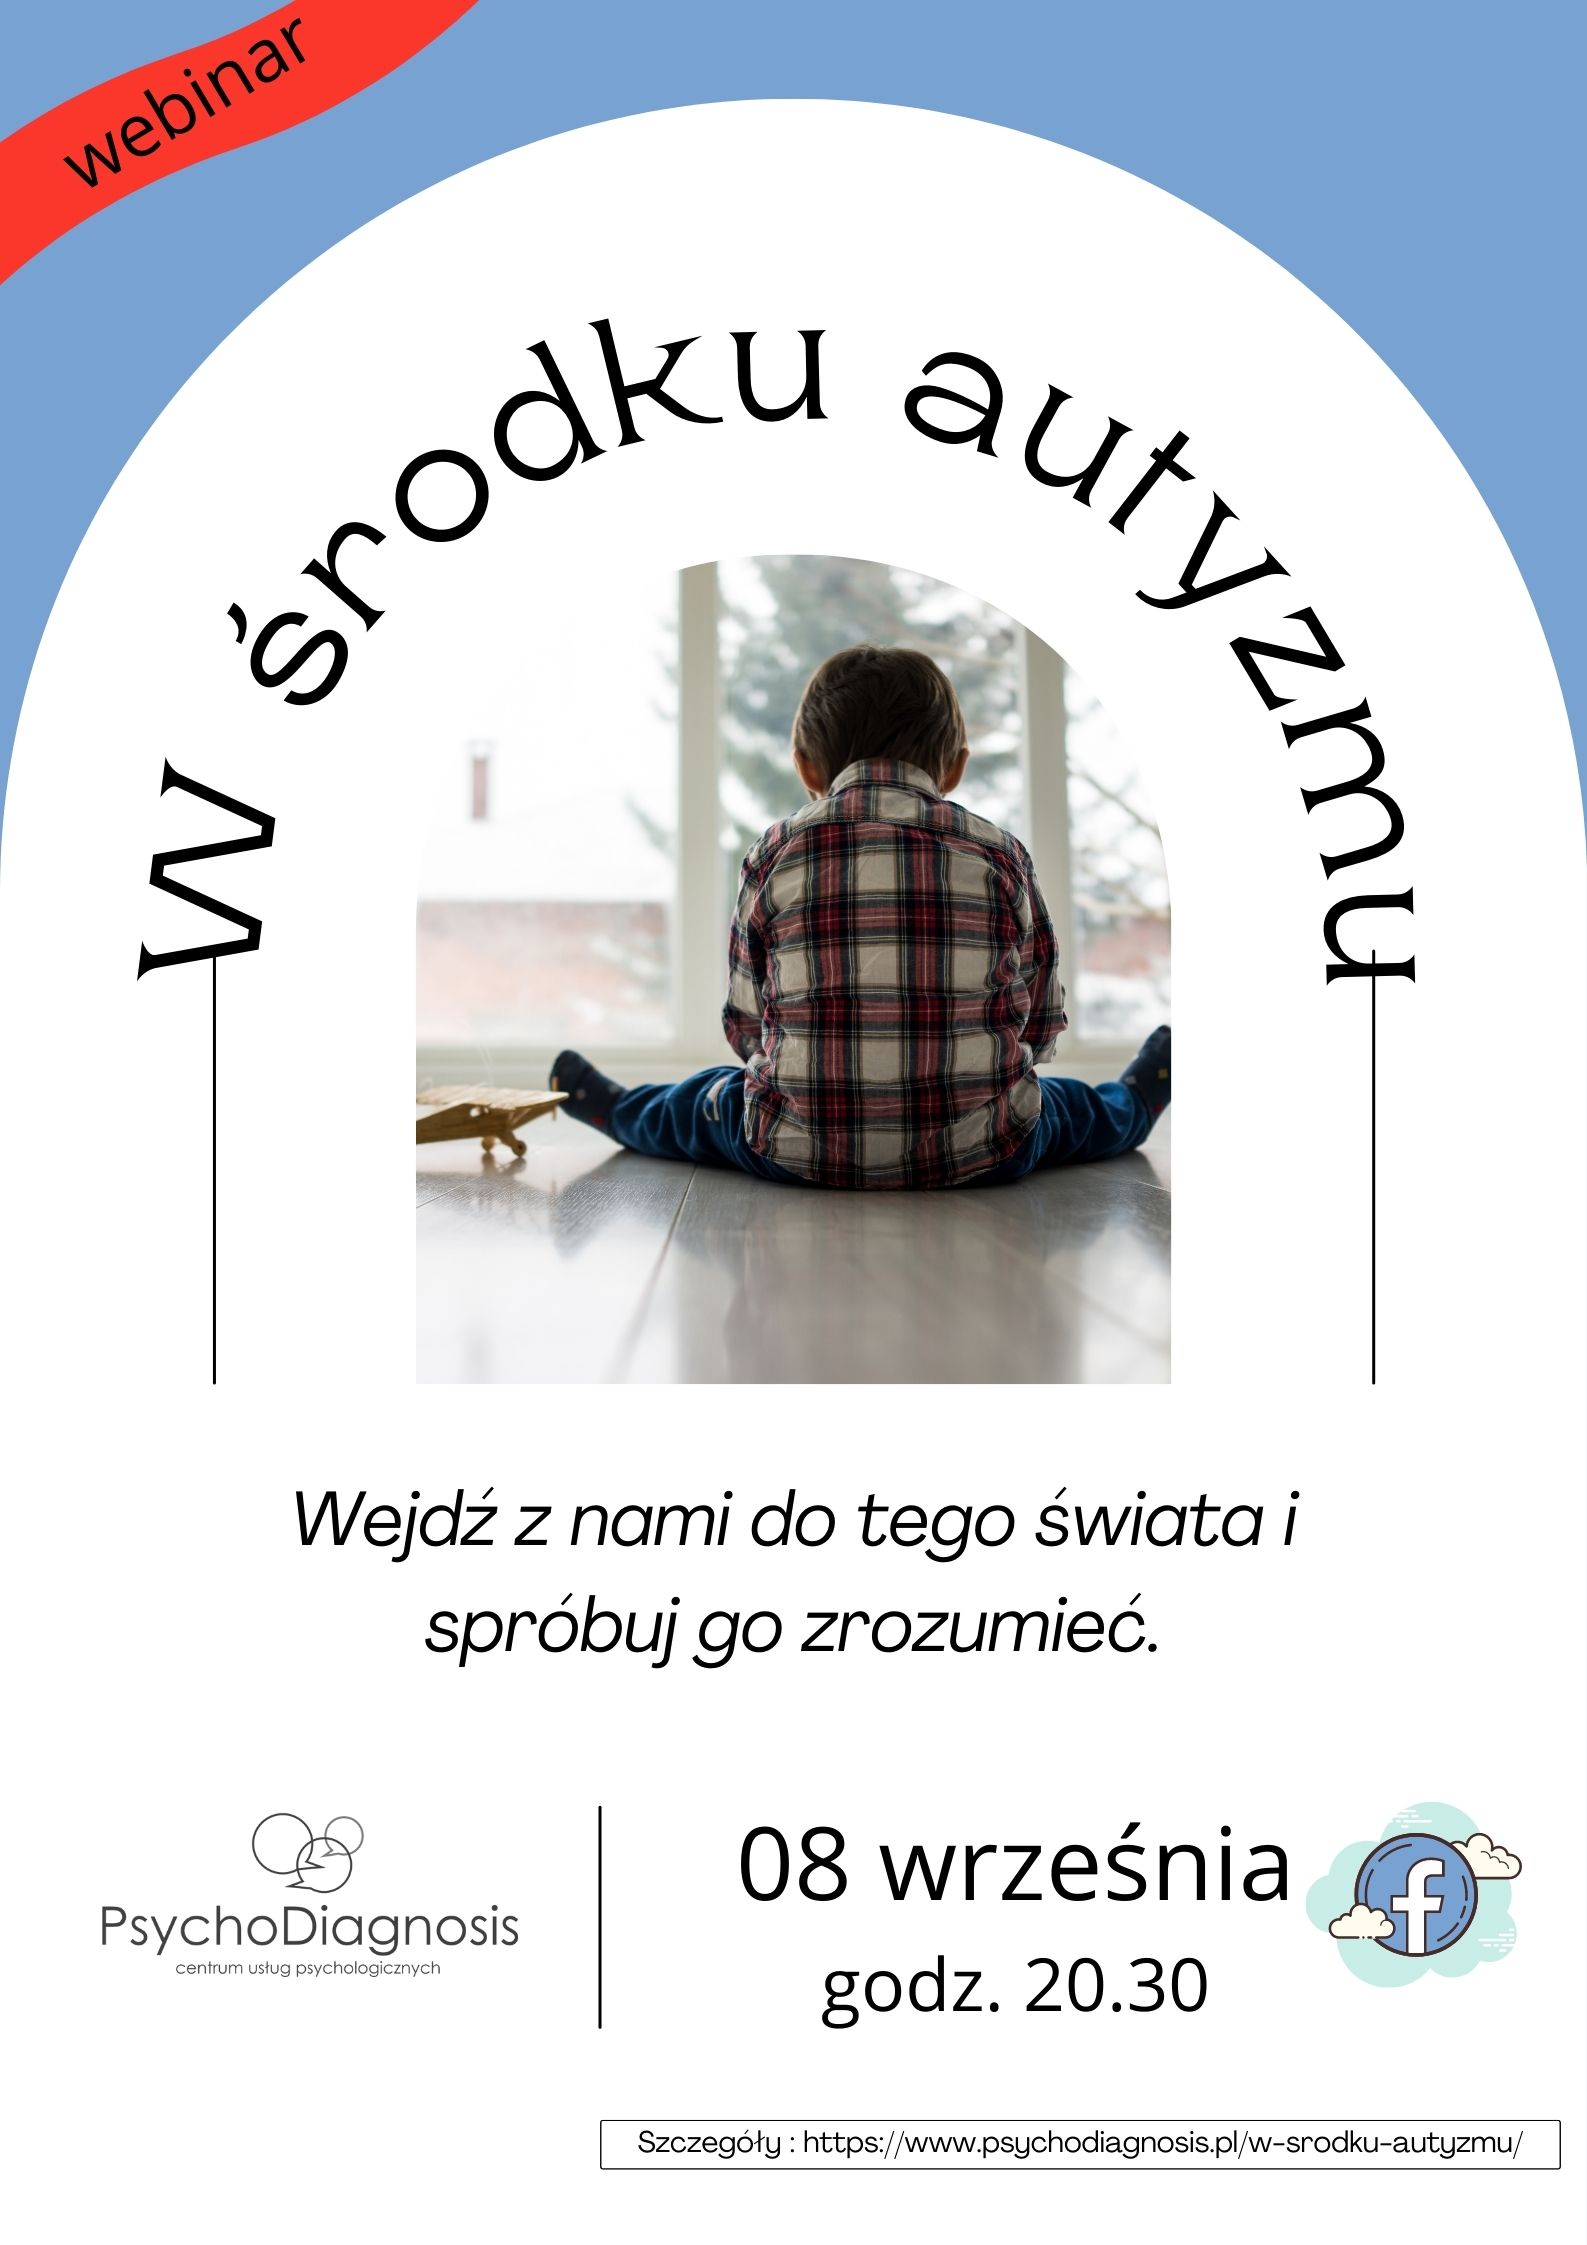 Read more about the article W środku autyzmu